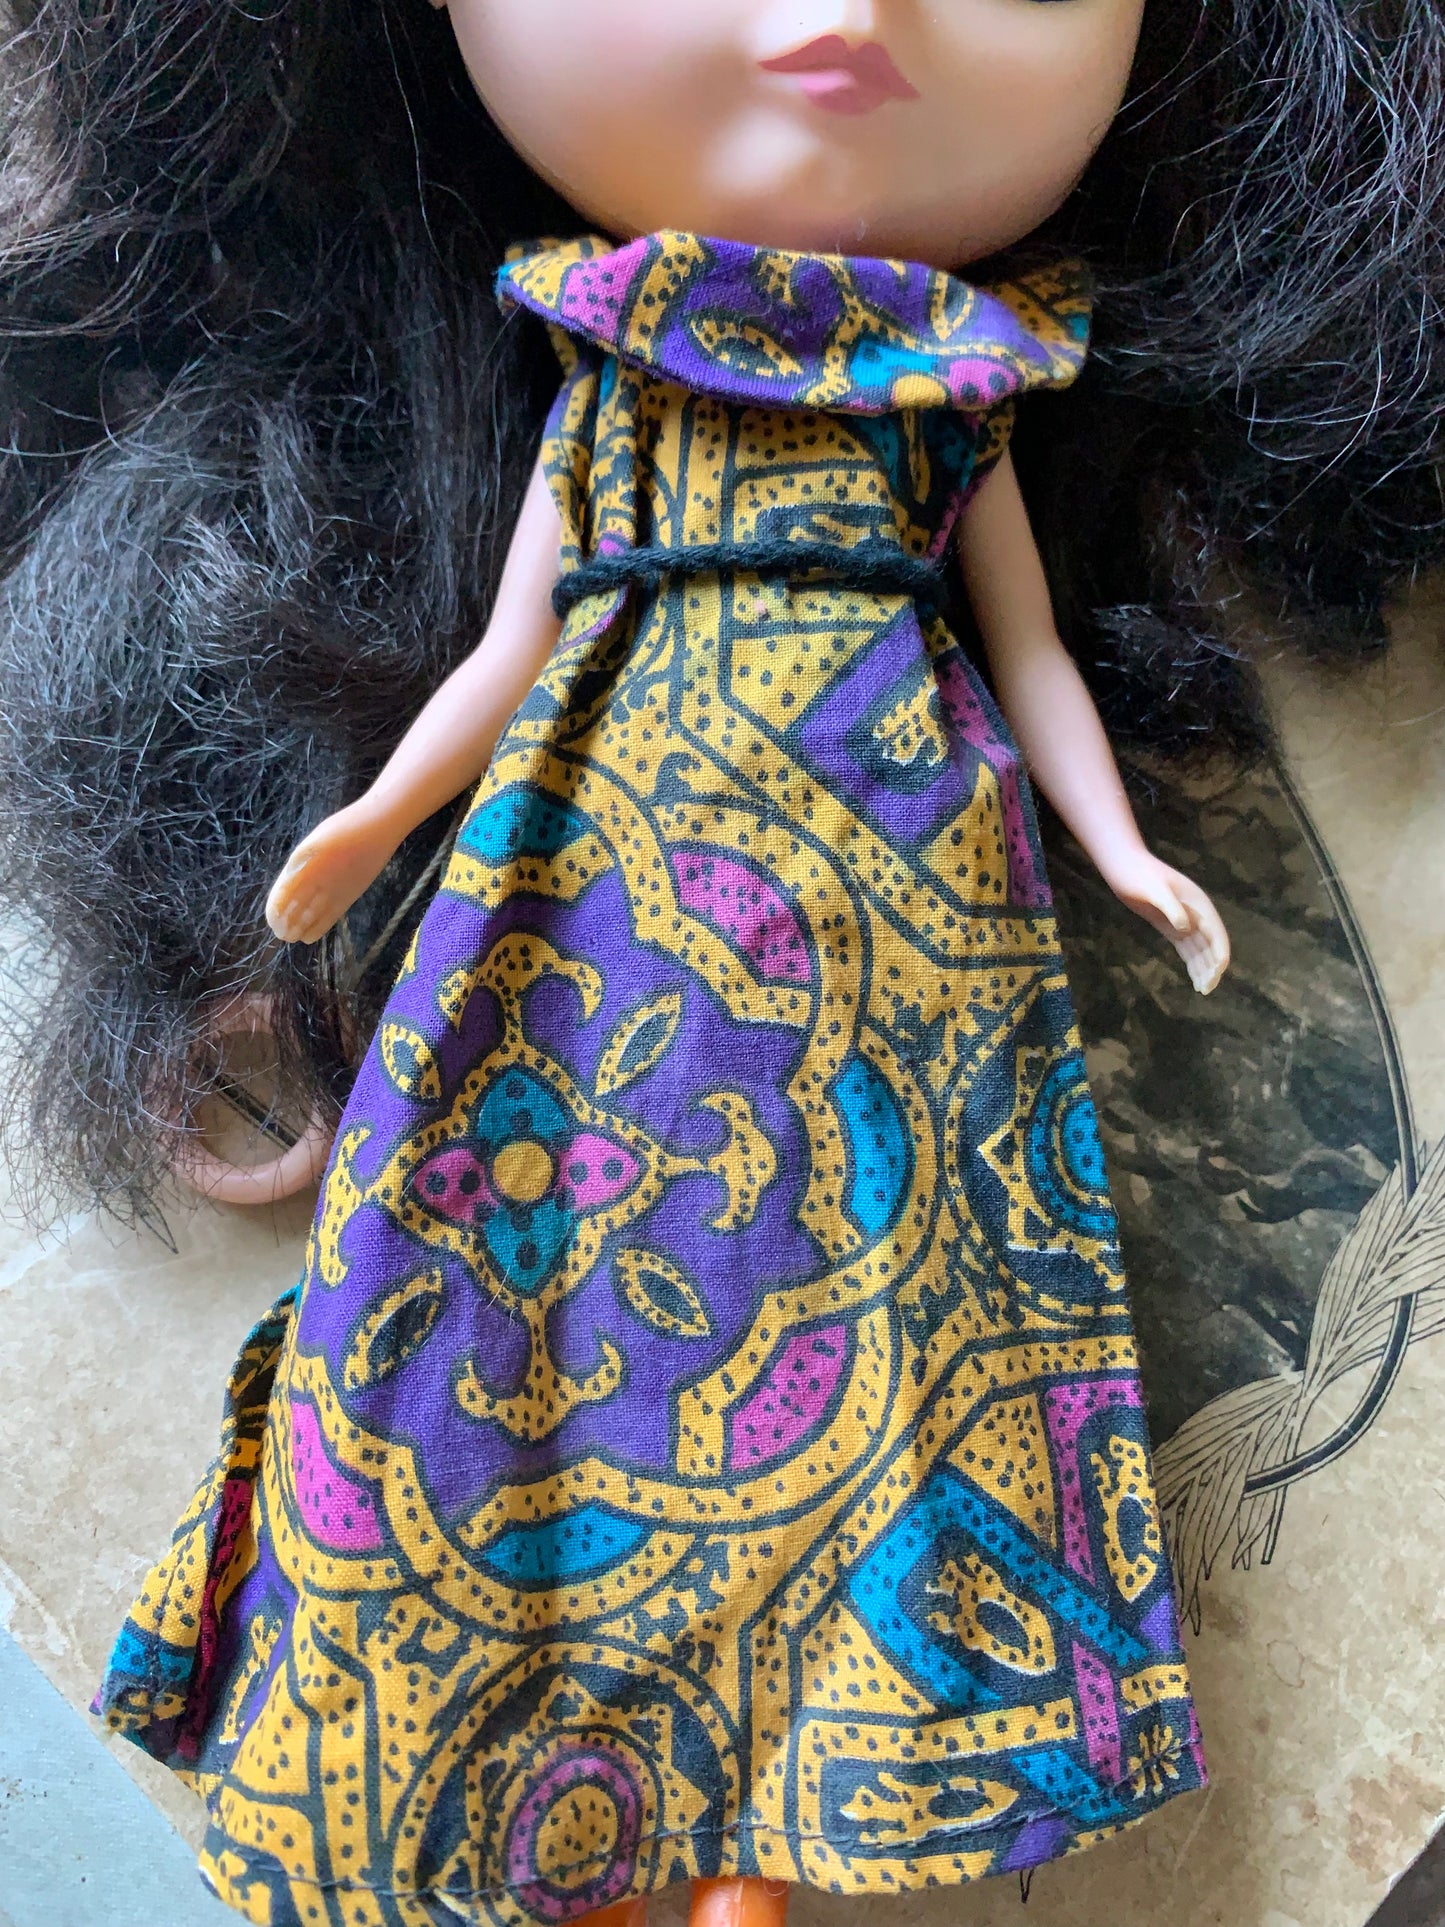 Vintage original 1972 Blythe doll